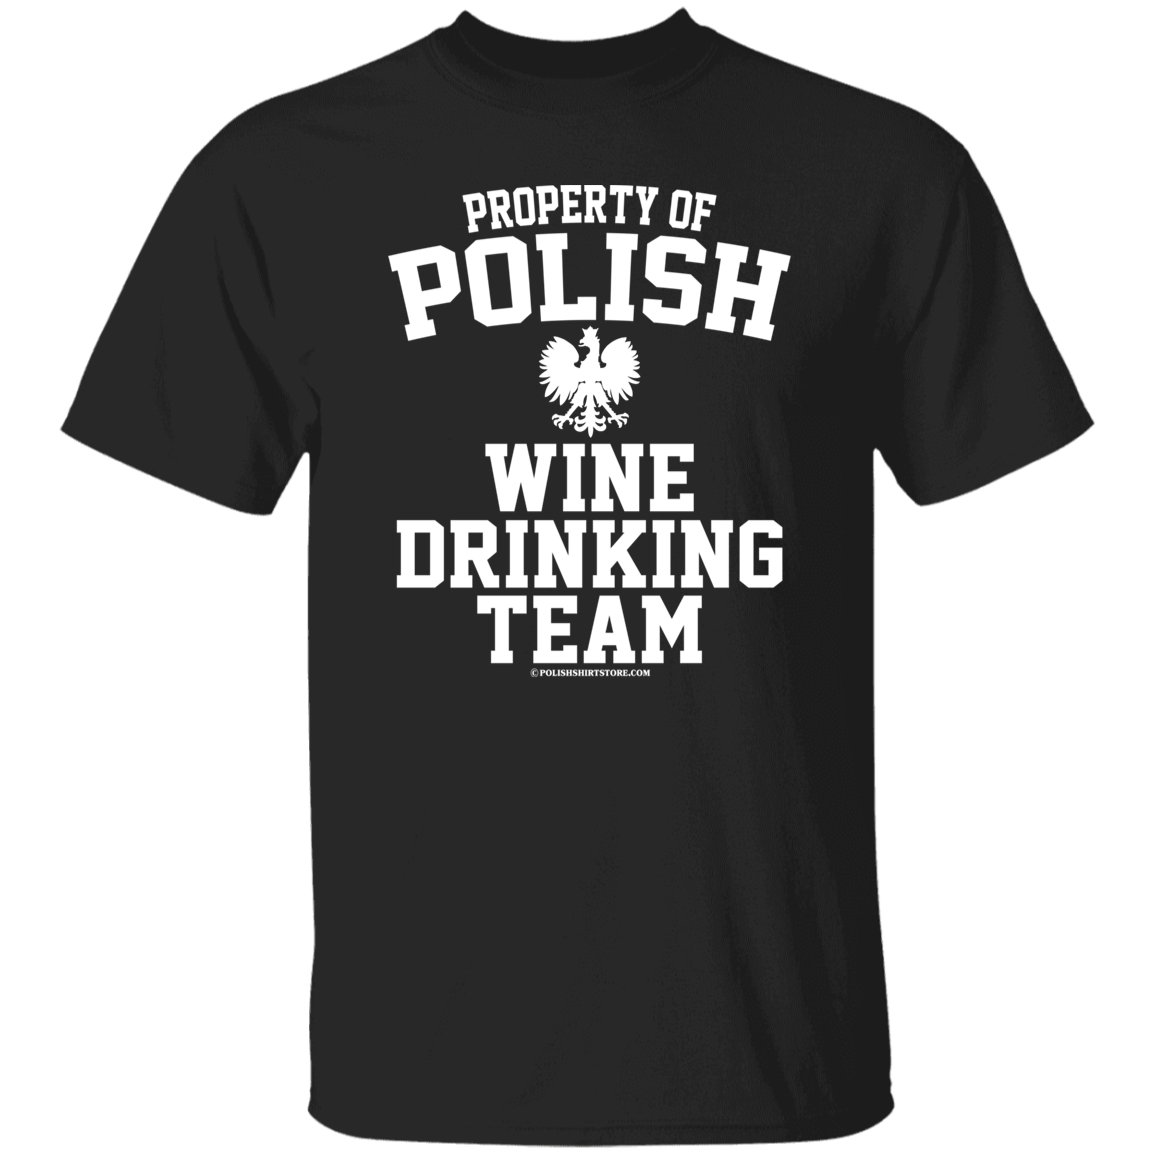 Property of Polish Wine Drinking Team Apparel CustomCat G500 5.3 oz. T-Shirt Black S